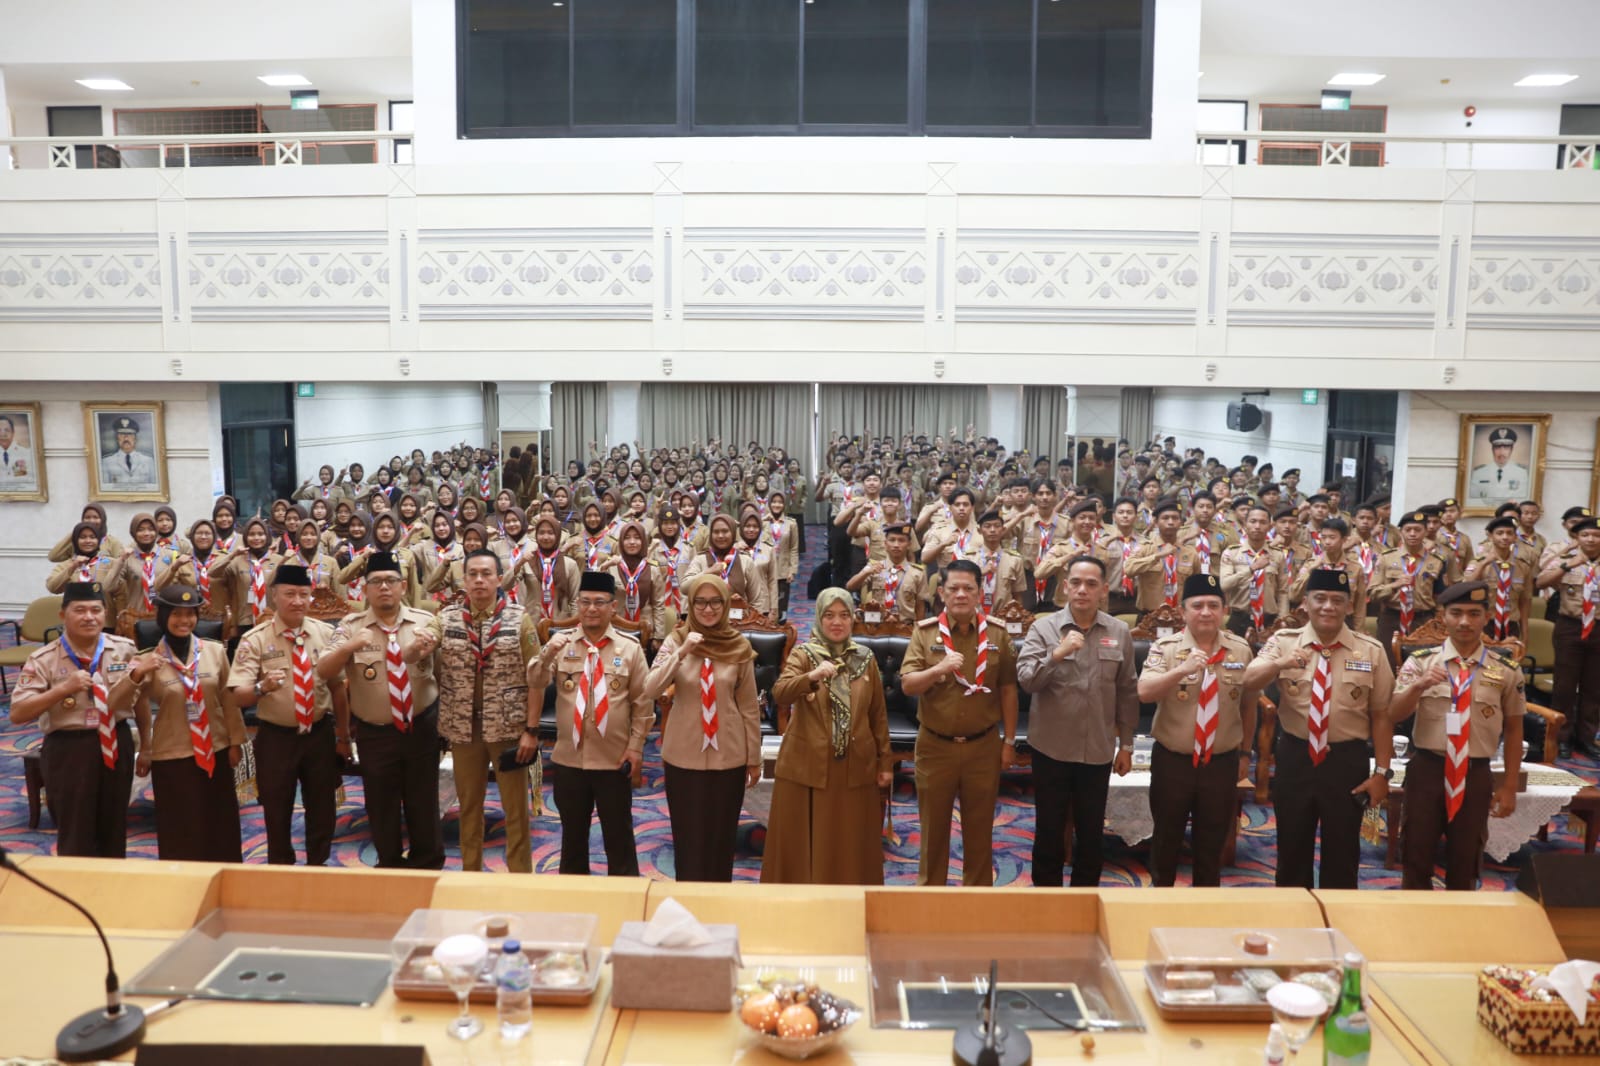 Wagub Nunik Buka Workshop Bela Negara dan Bahaya Radikalisme Kwarda Pramuka Lampung